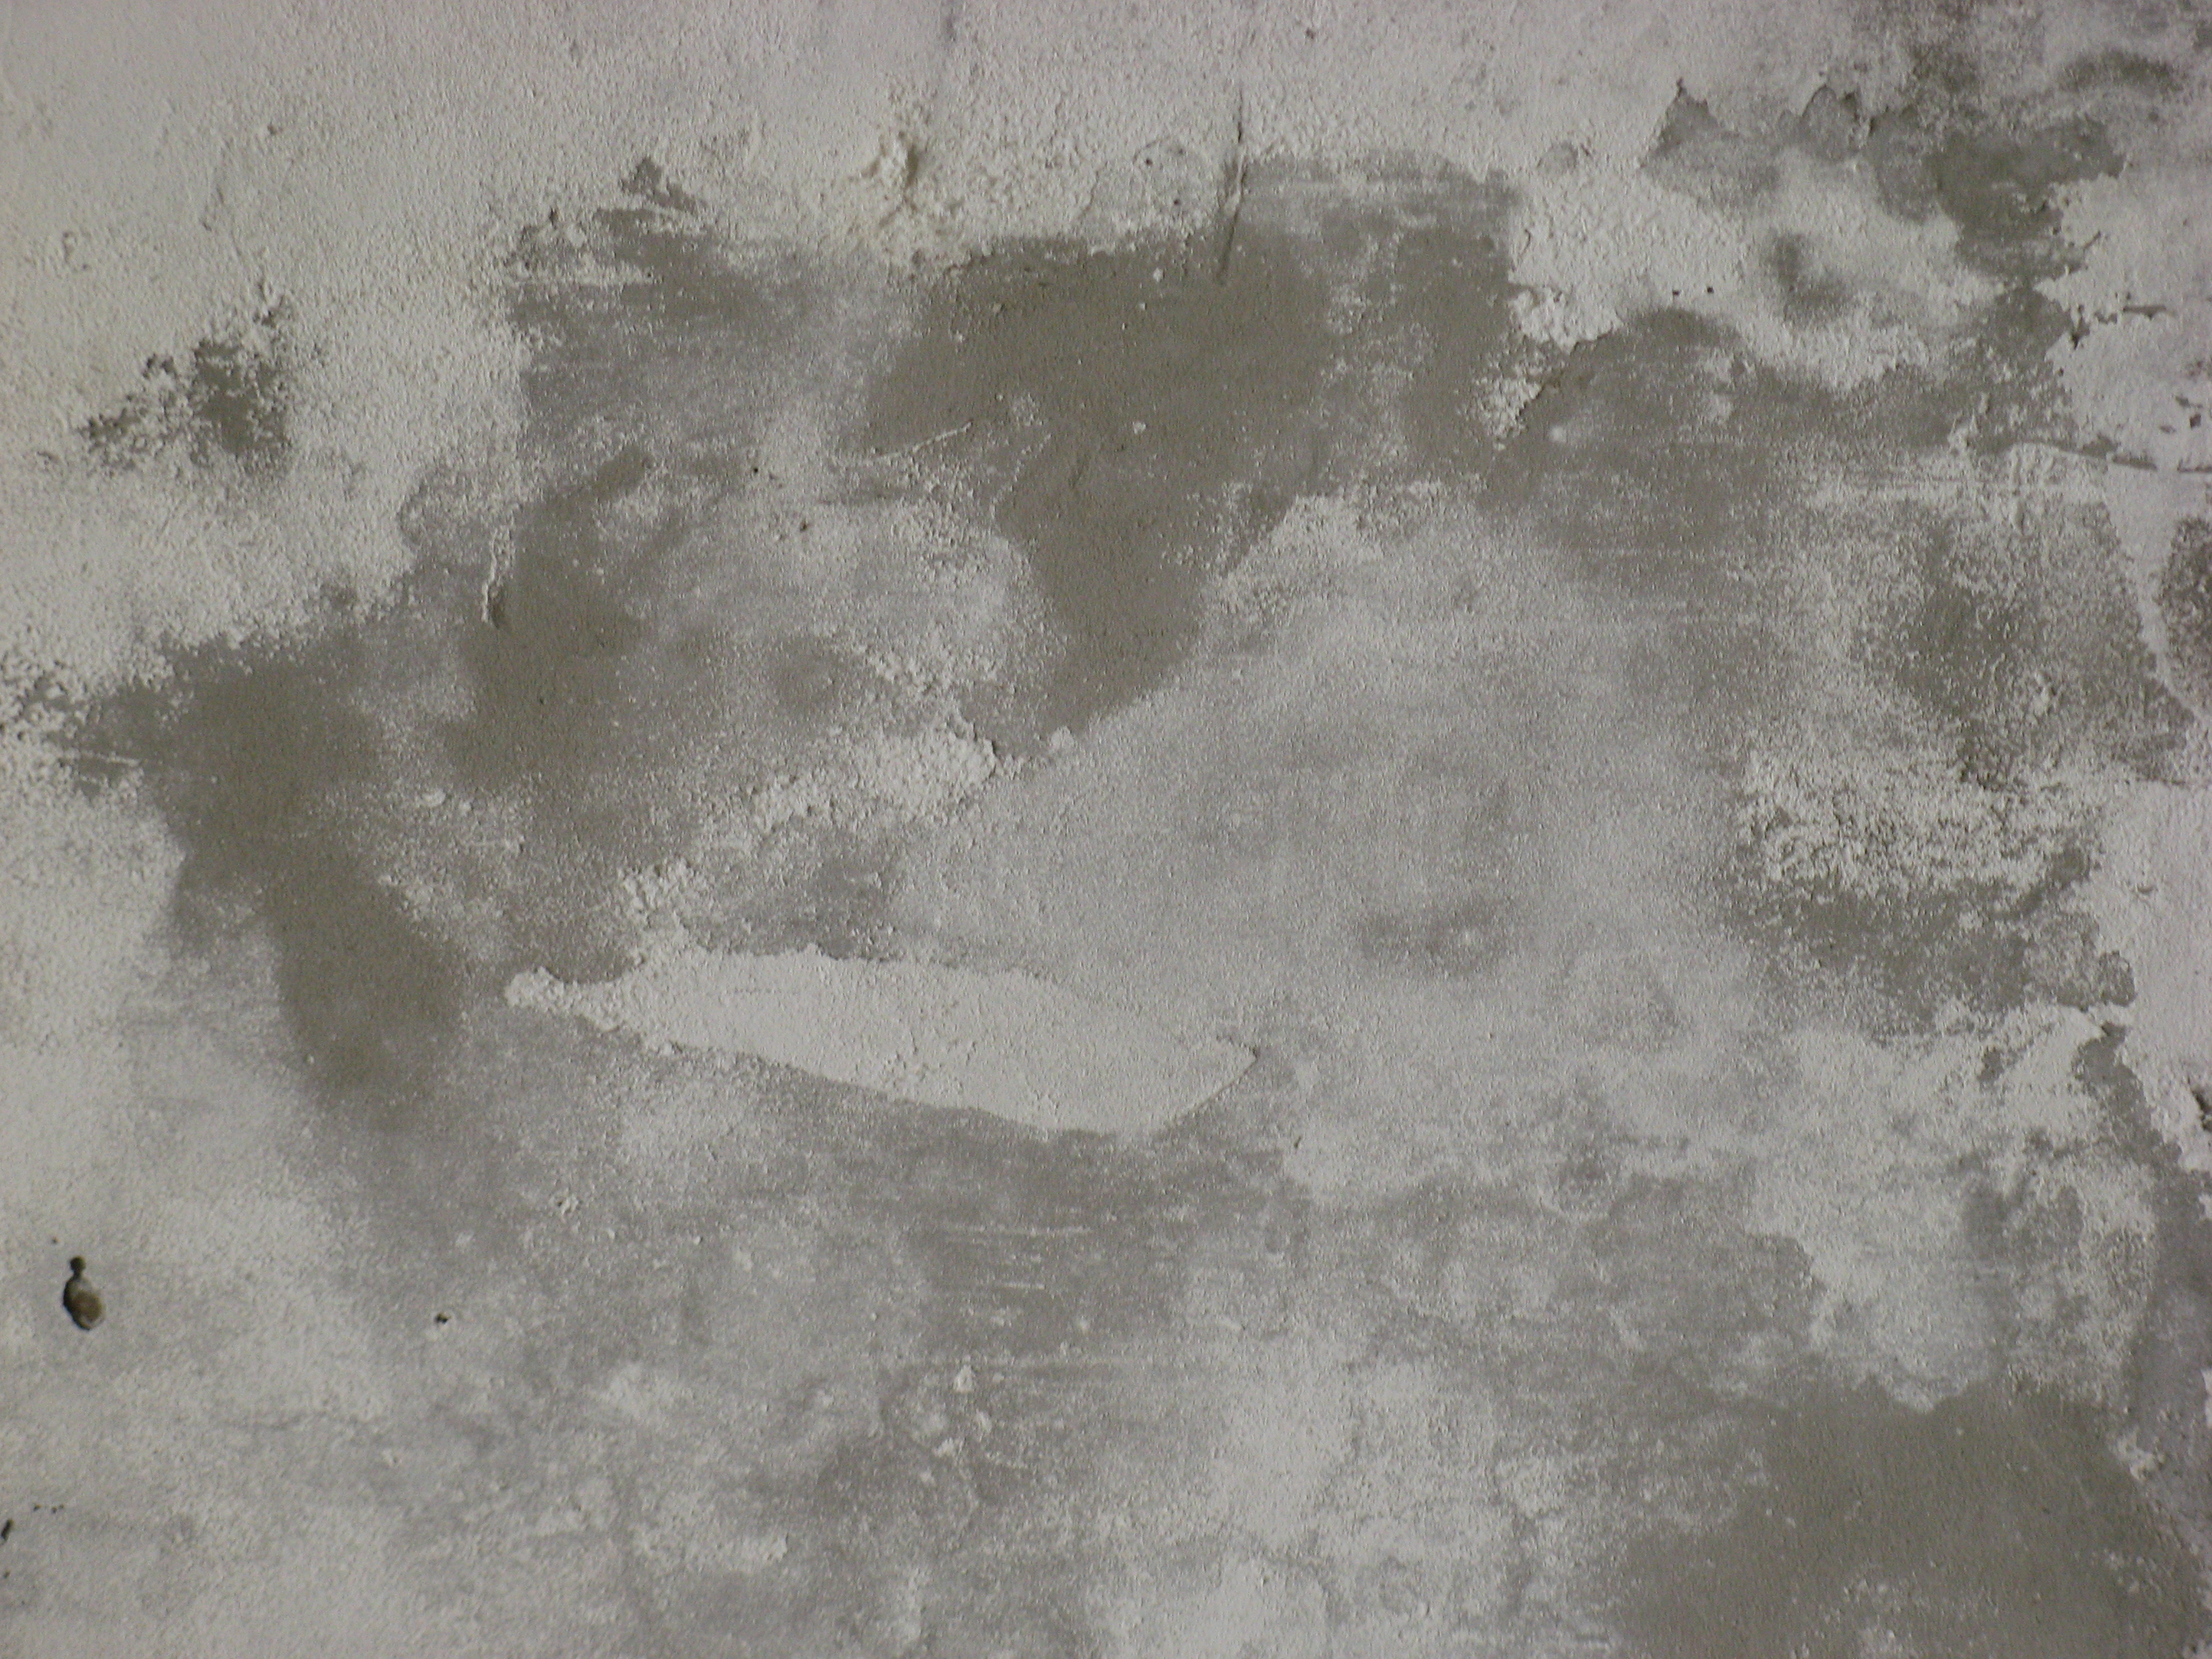 Grunge concrete texture photo